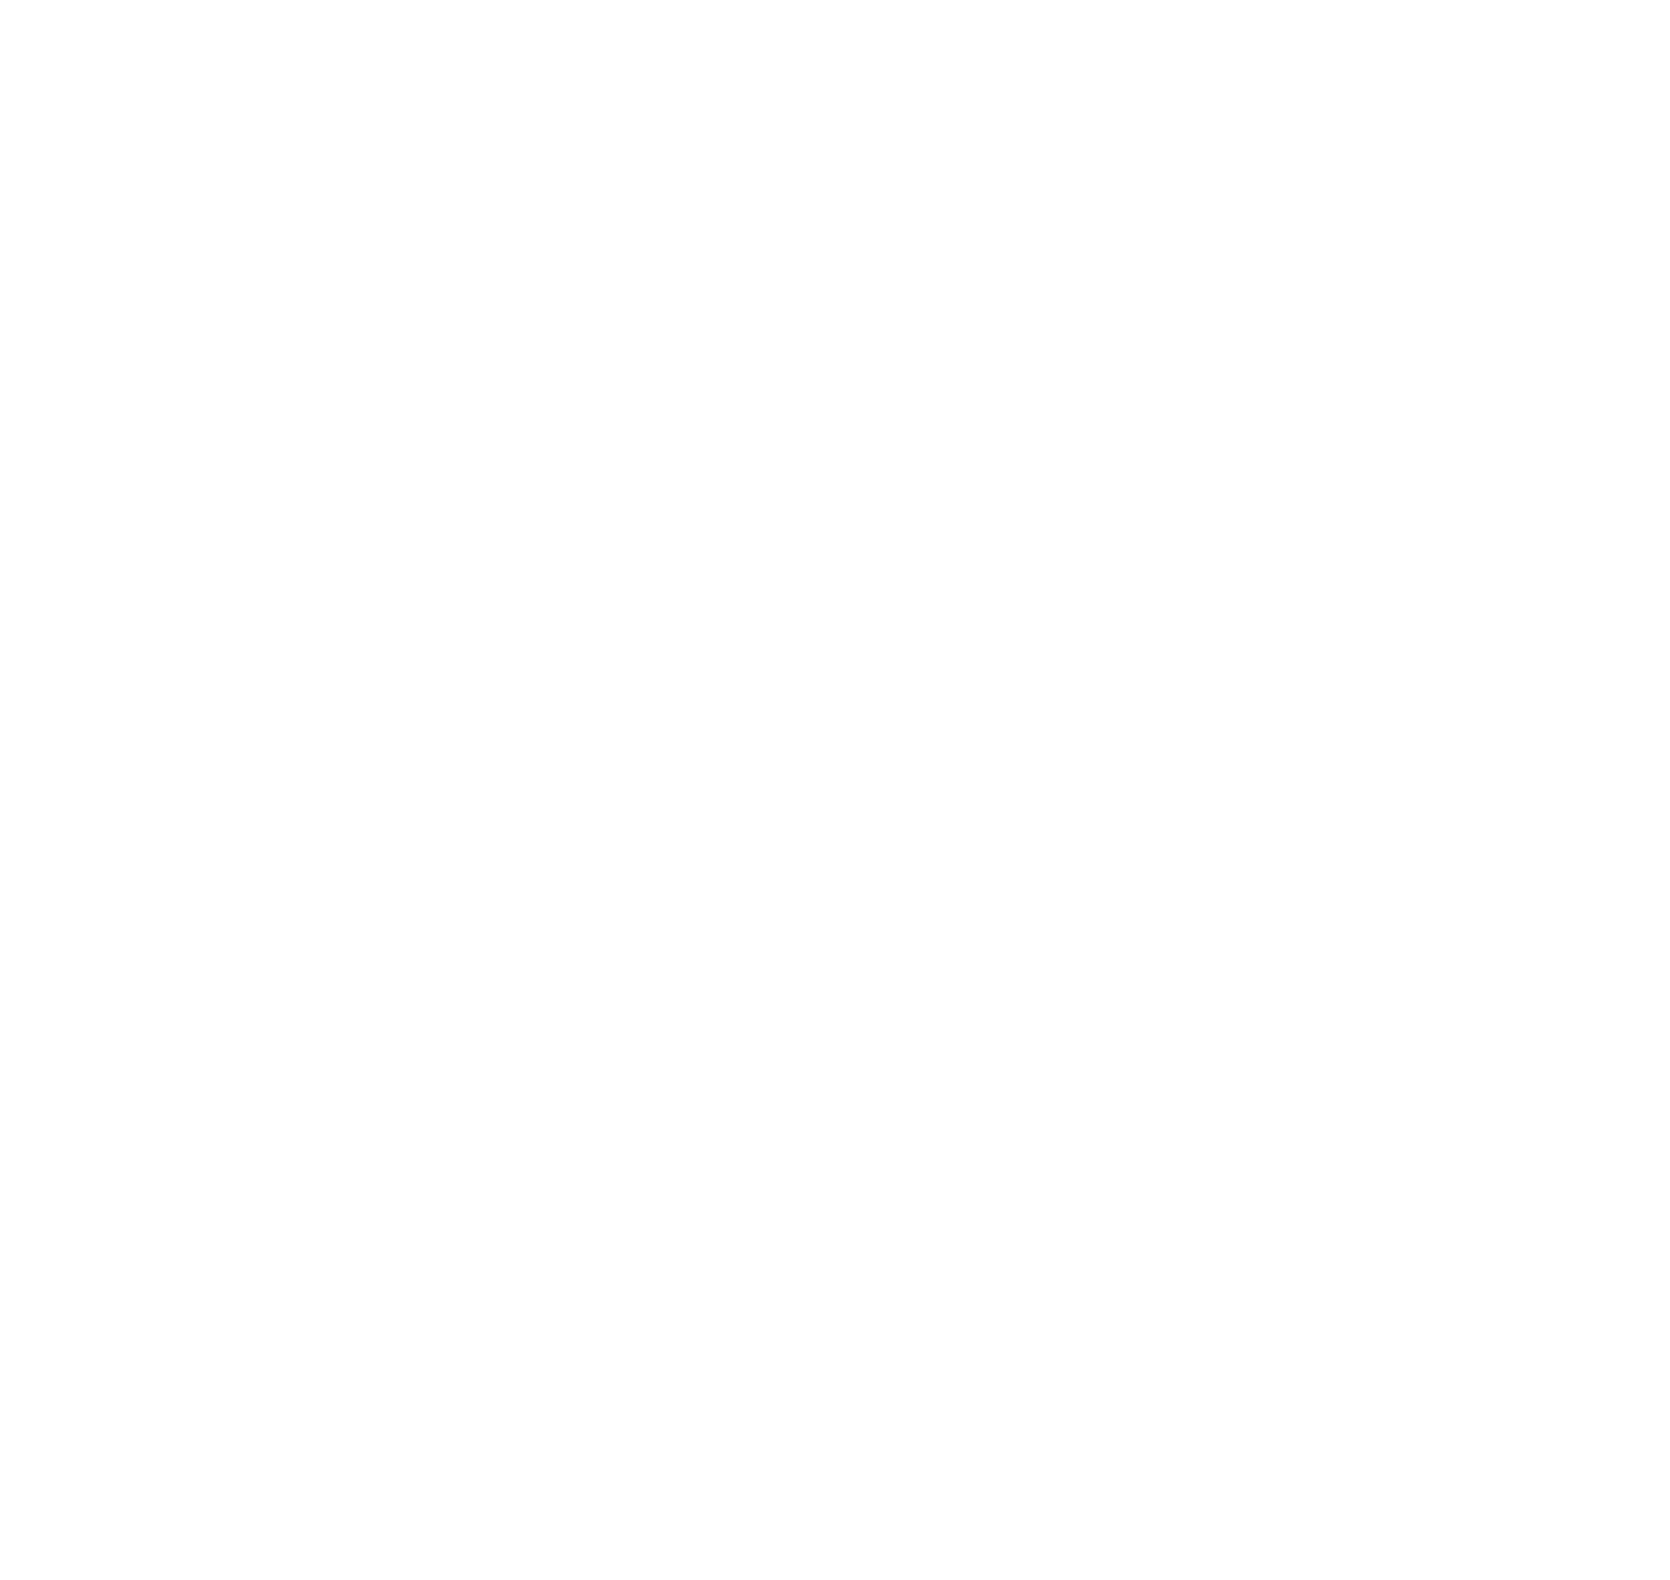 Bristol Twin Cities Lions Club Logo